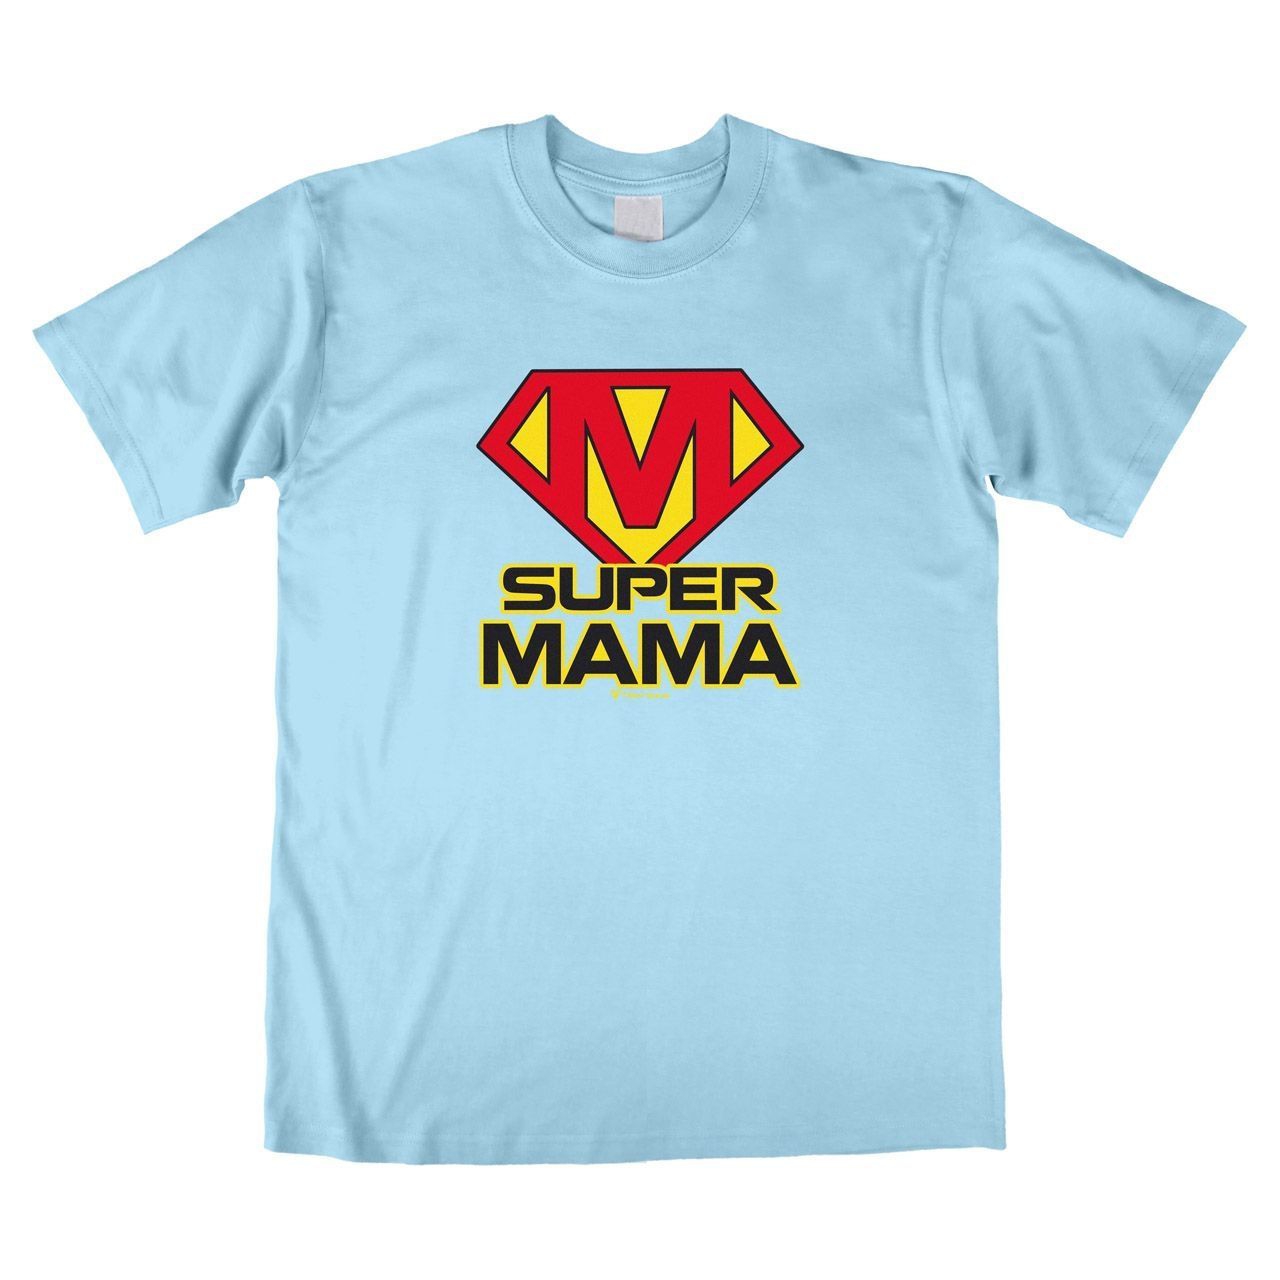 Super Mama Unisex T-Shirt hellblau Small